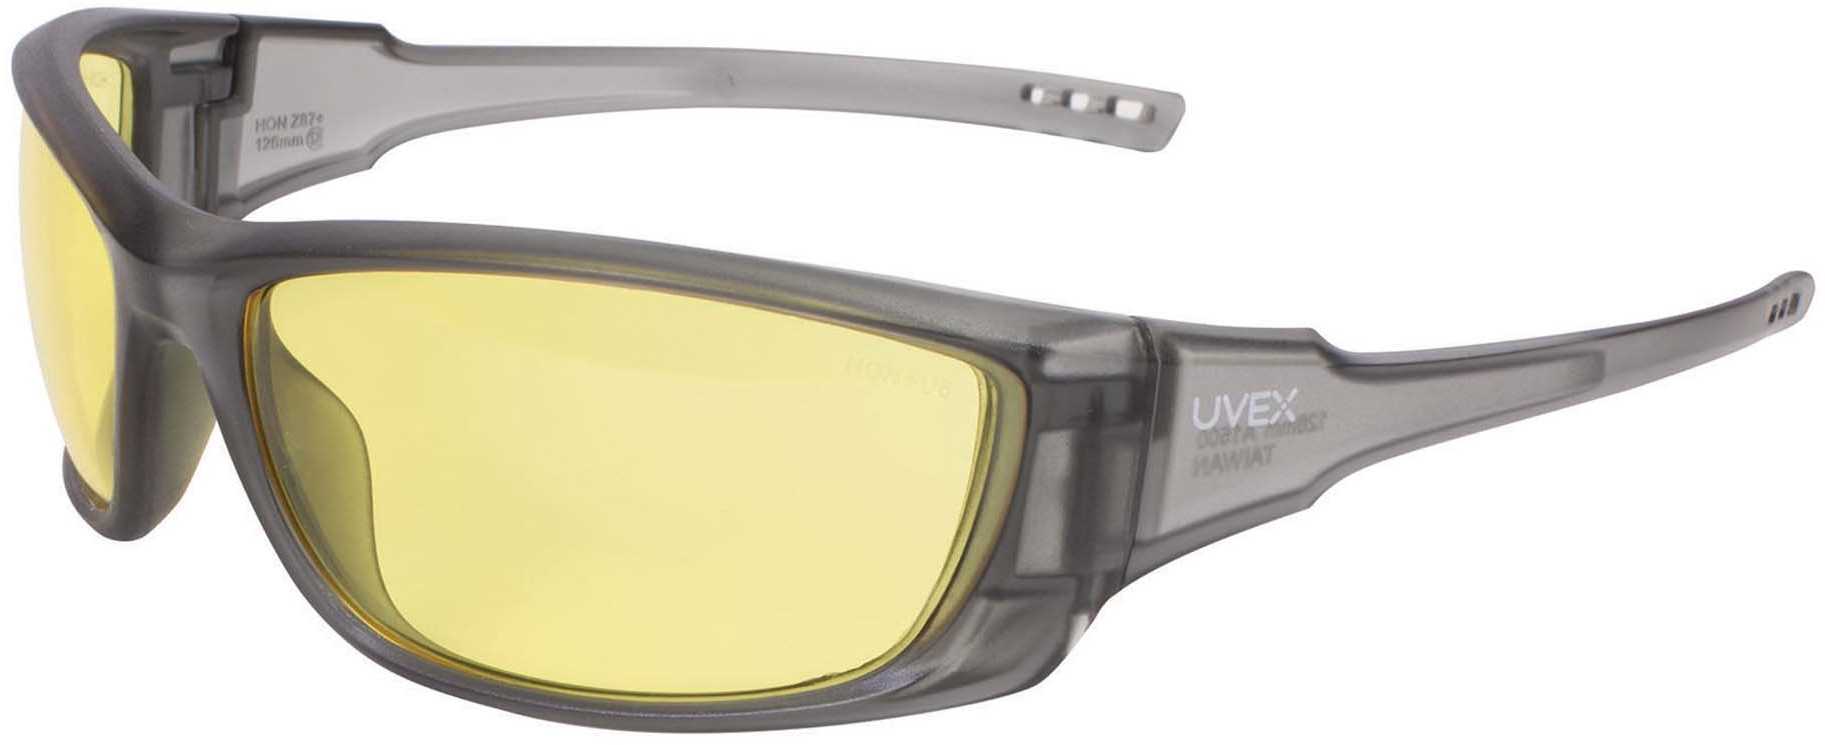 Howard Leight Uvex A1500 Safety Eyewear w/Hardcoat Lens Amber Md: R-02227